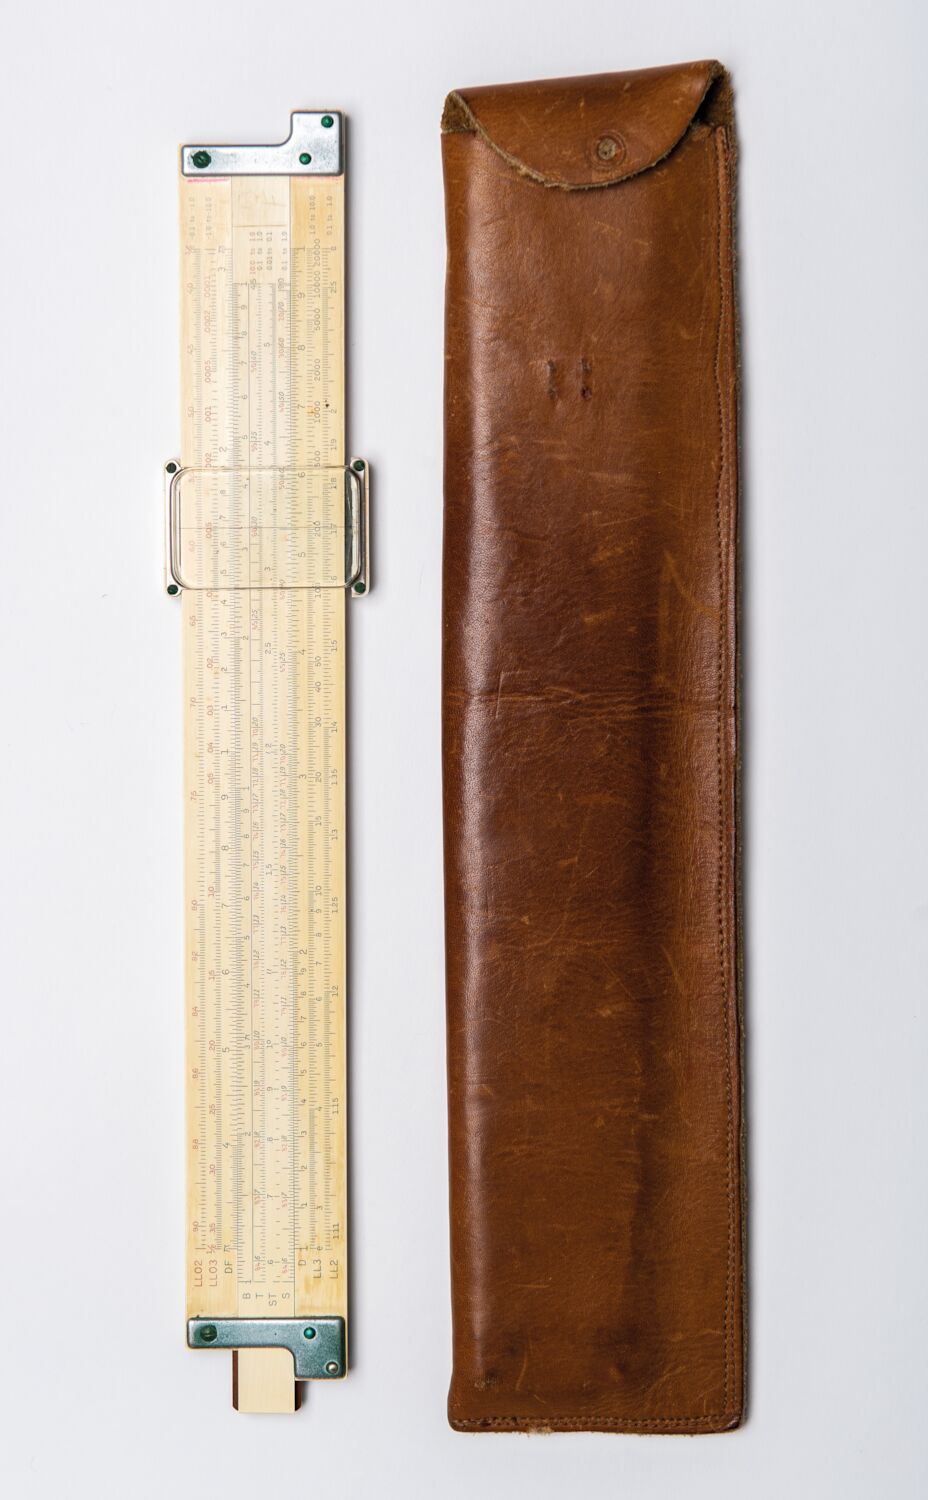 Steve’s vintage slide rule sits next to its brown leather case.